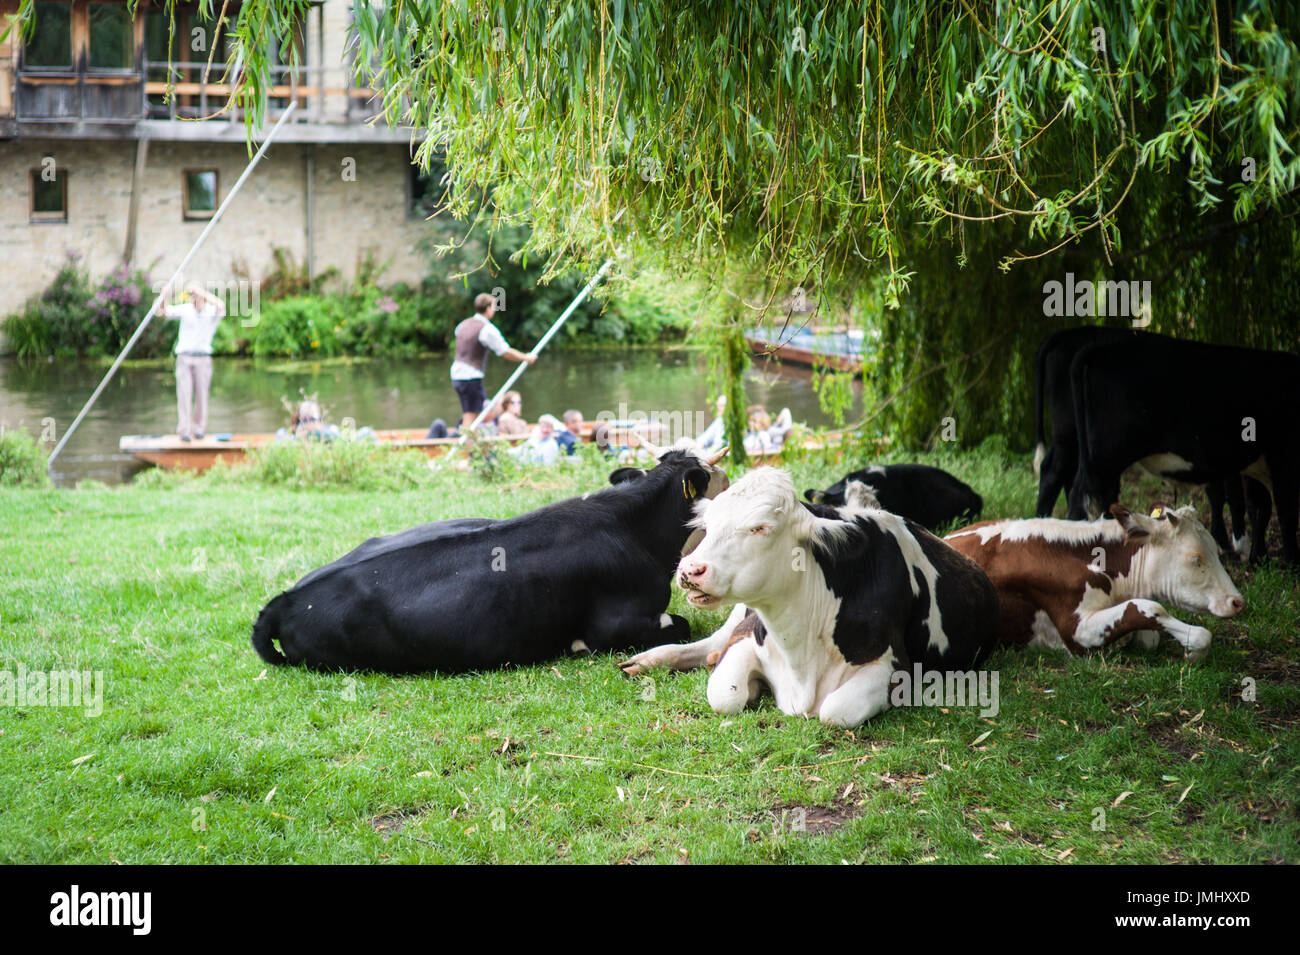 Cambridge-Kühe - Wandern Kühe frei auf dem Rücken in Cambridge, in der Nähe des Flusses Cam Stockfoto